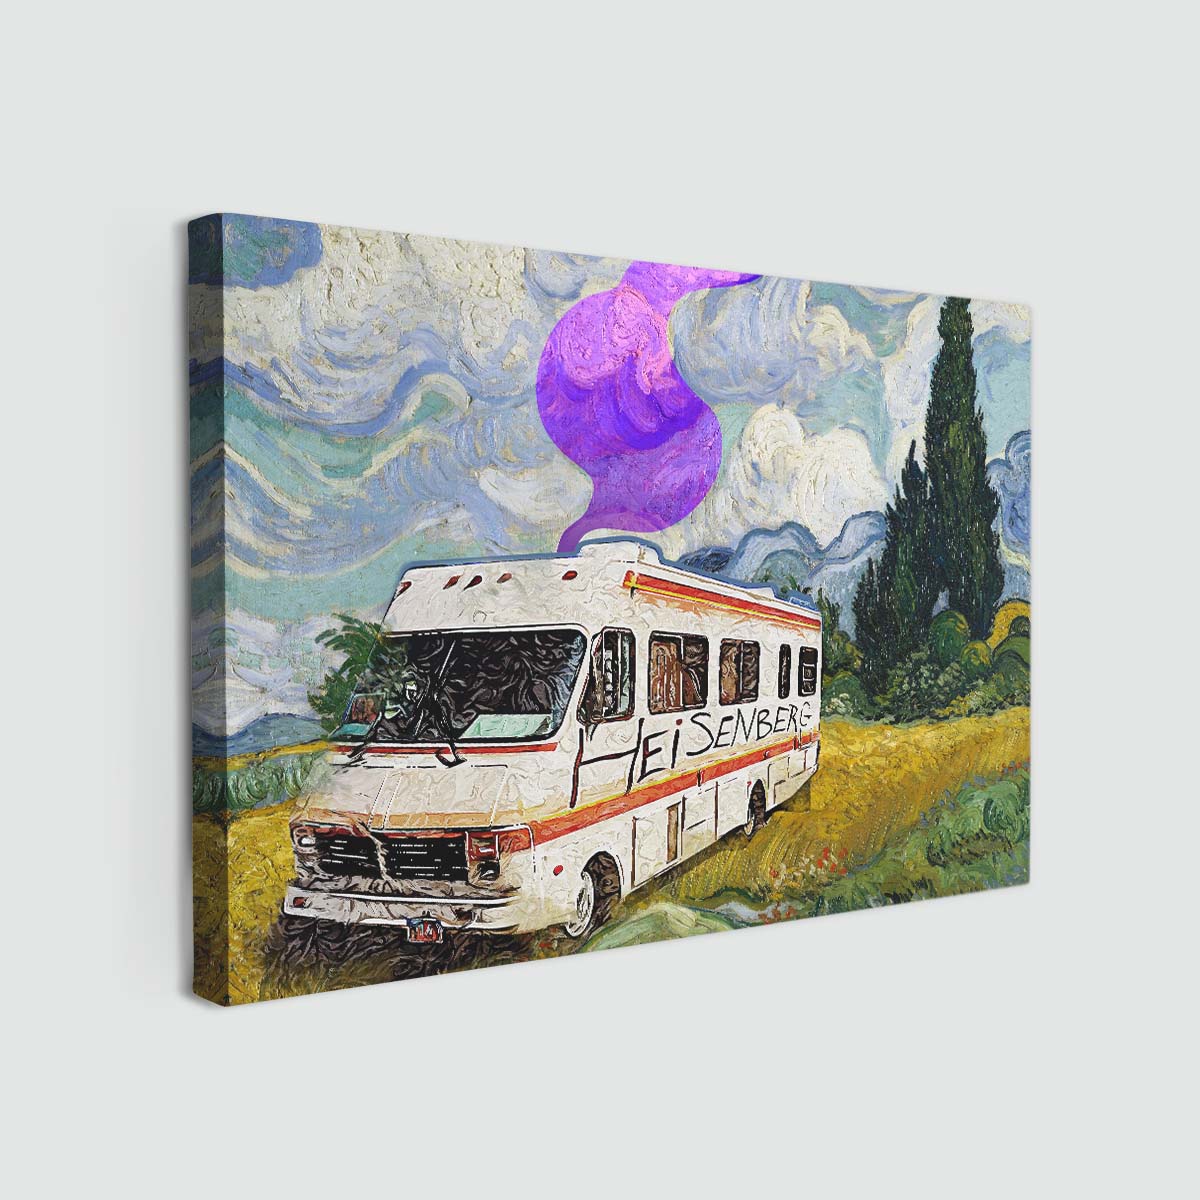 "The Impressionist Caravan" canvas print